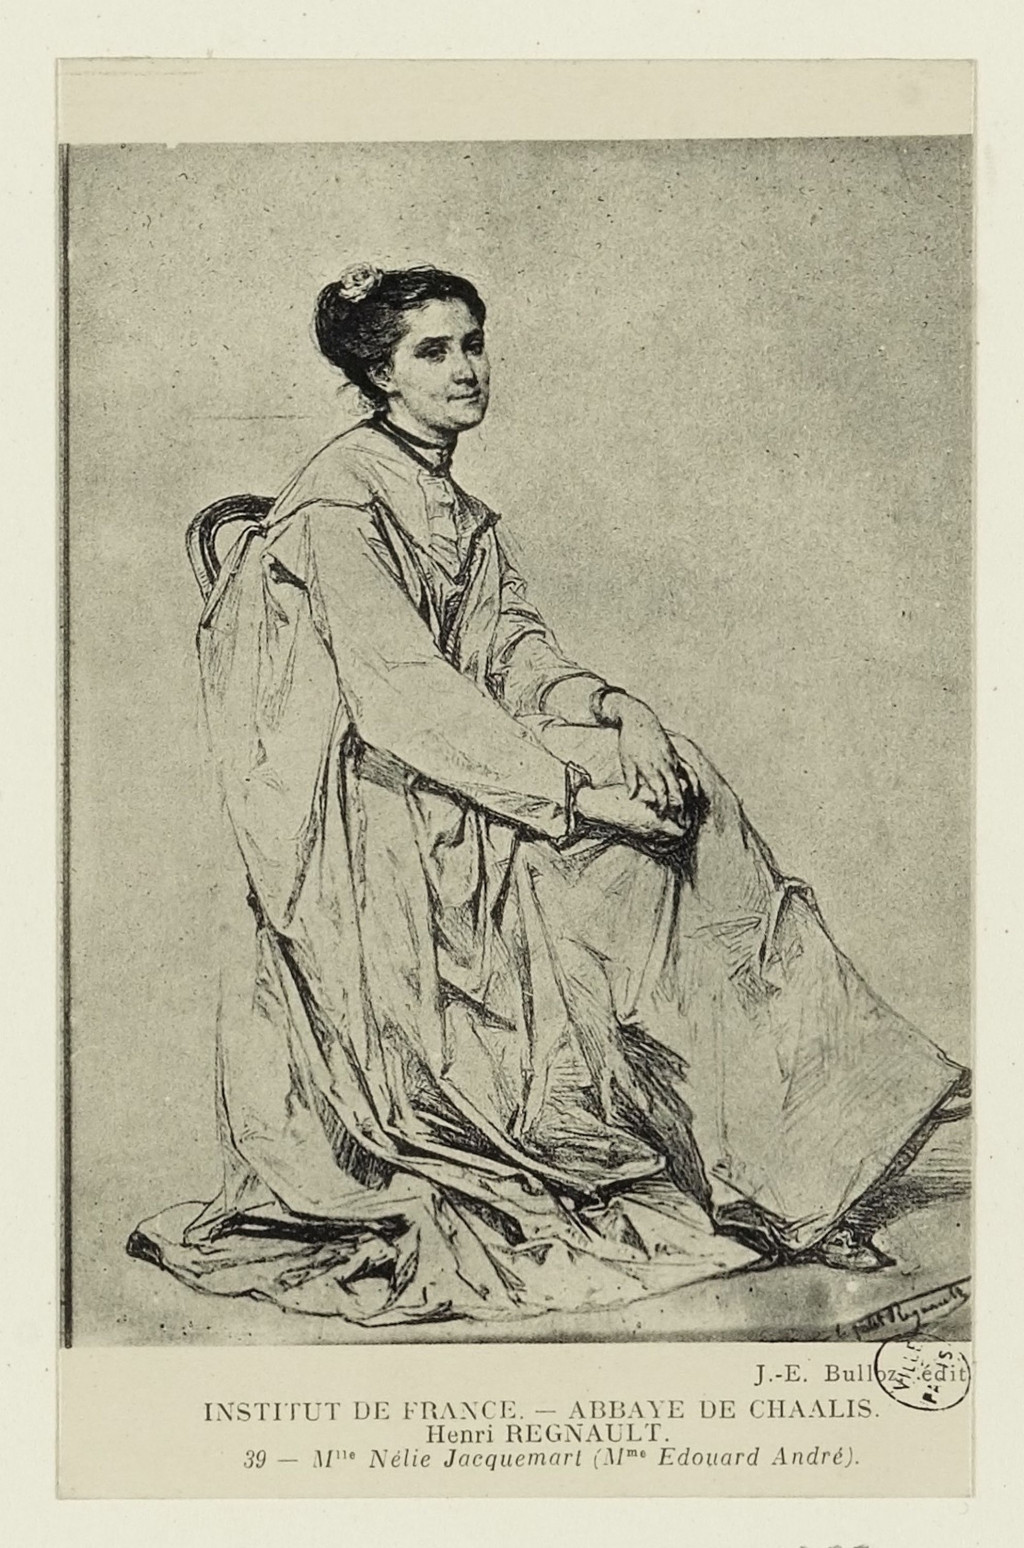 Drawn portrait of Nélie Jacquemart sitting on a chair